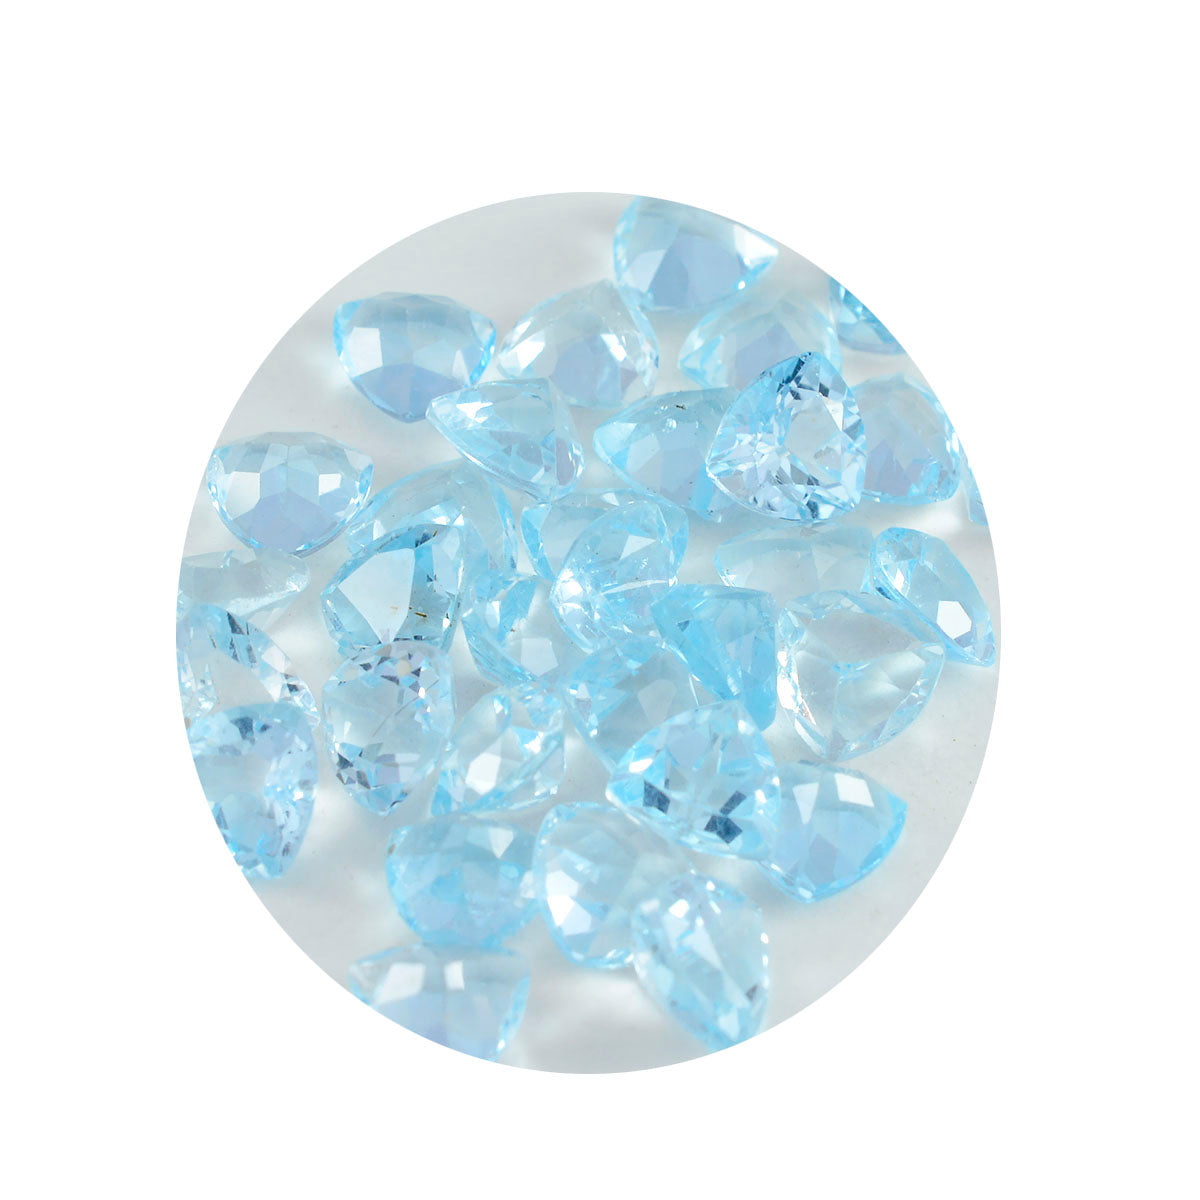 Riyogems 1PC Real Blue Topaz Faceted 5x5 mm Trillion Shape astonishing Quality Gemstone